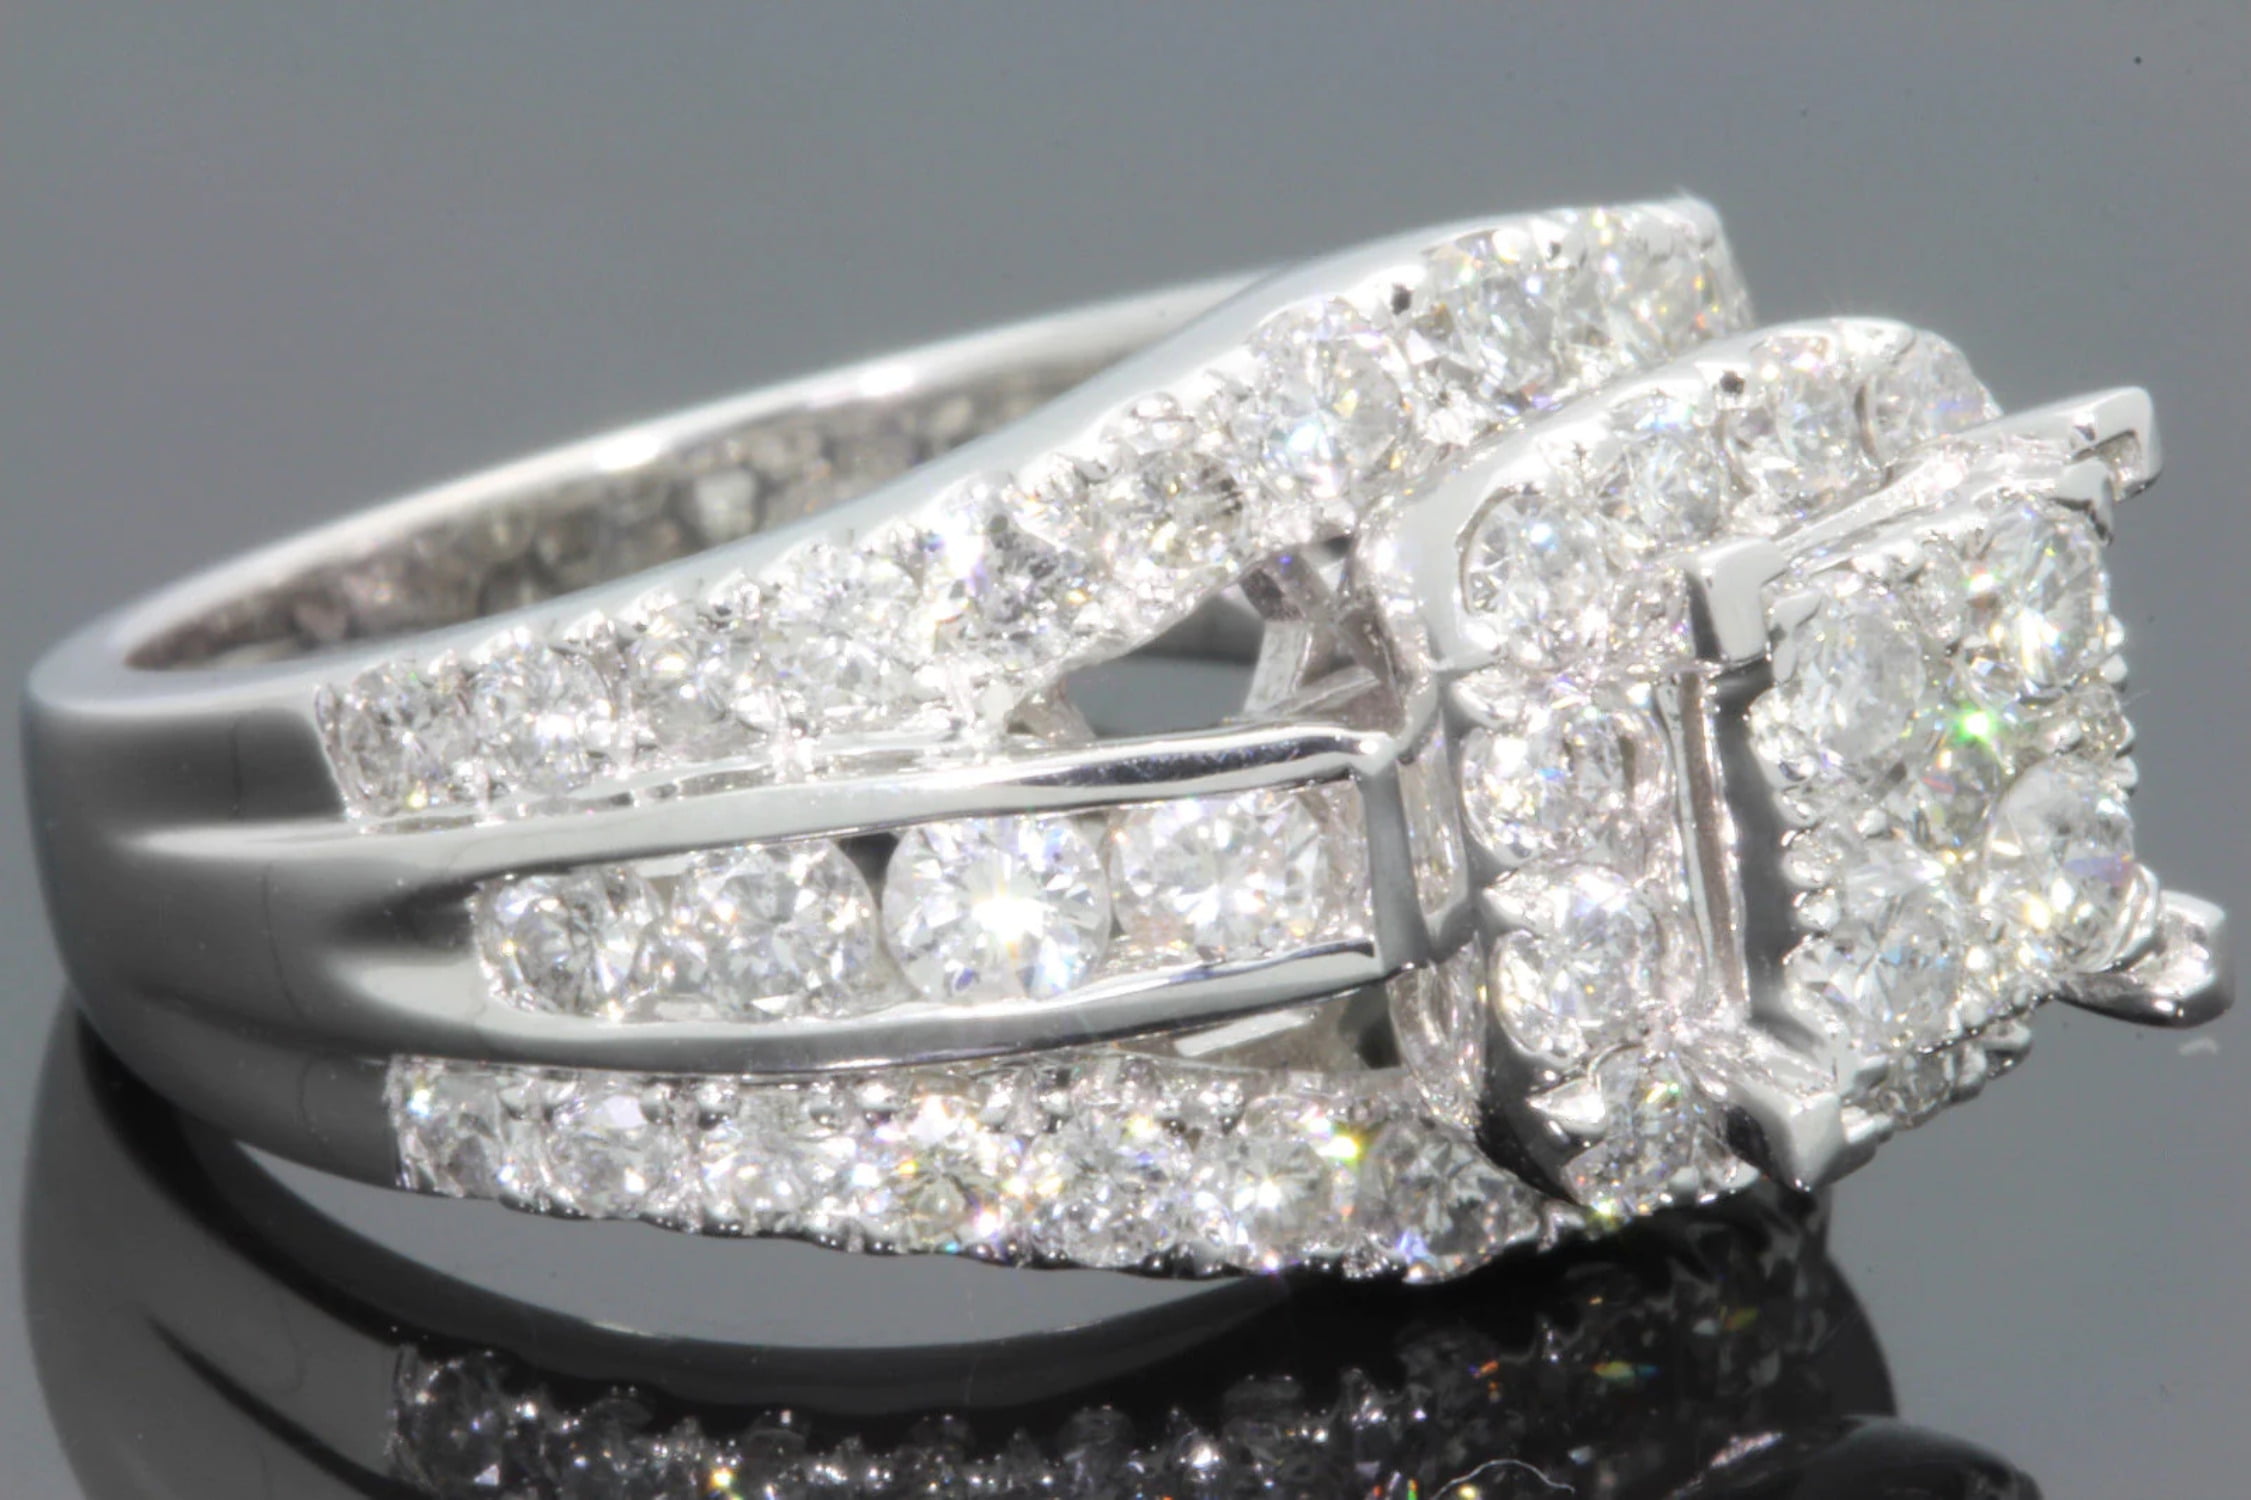 Heiheiup Gorgeous Wedding Rings Women Jewelry White Rings 6 10Beautiful Ring  Alloy Inlaid Rhinestone Real Rings for Teen Girls - Walmart.com